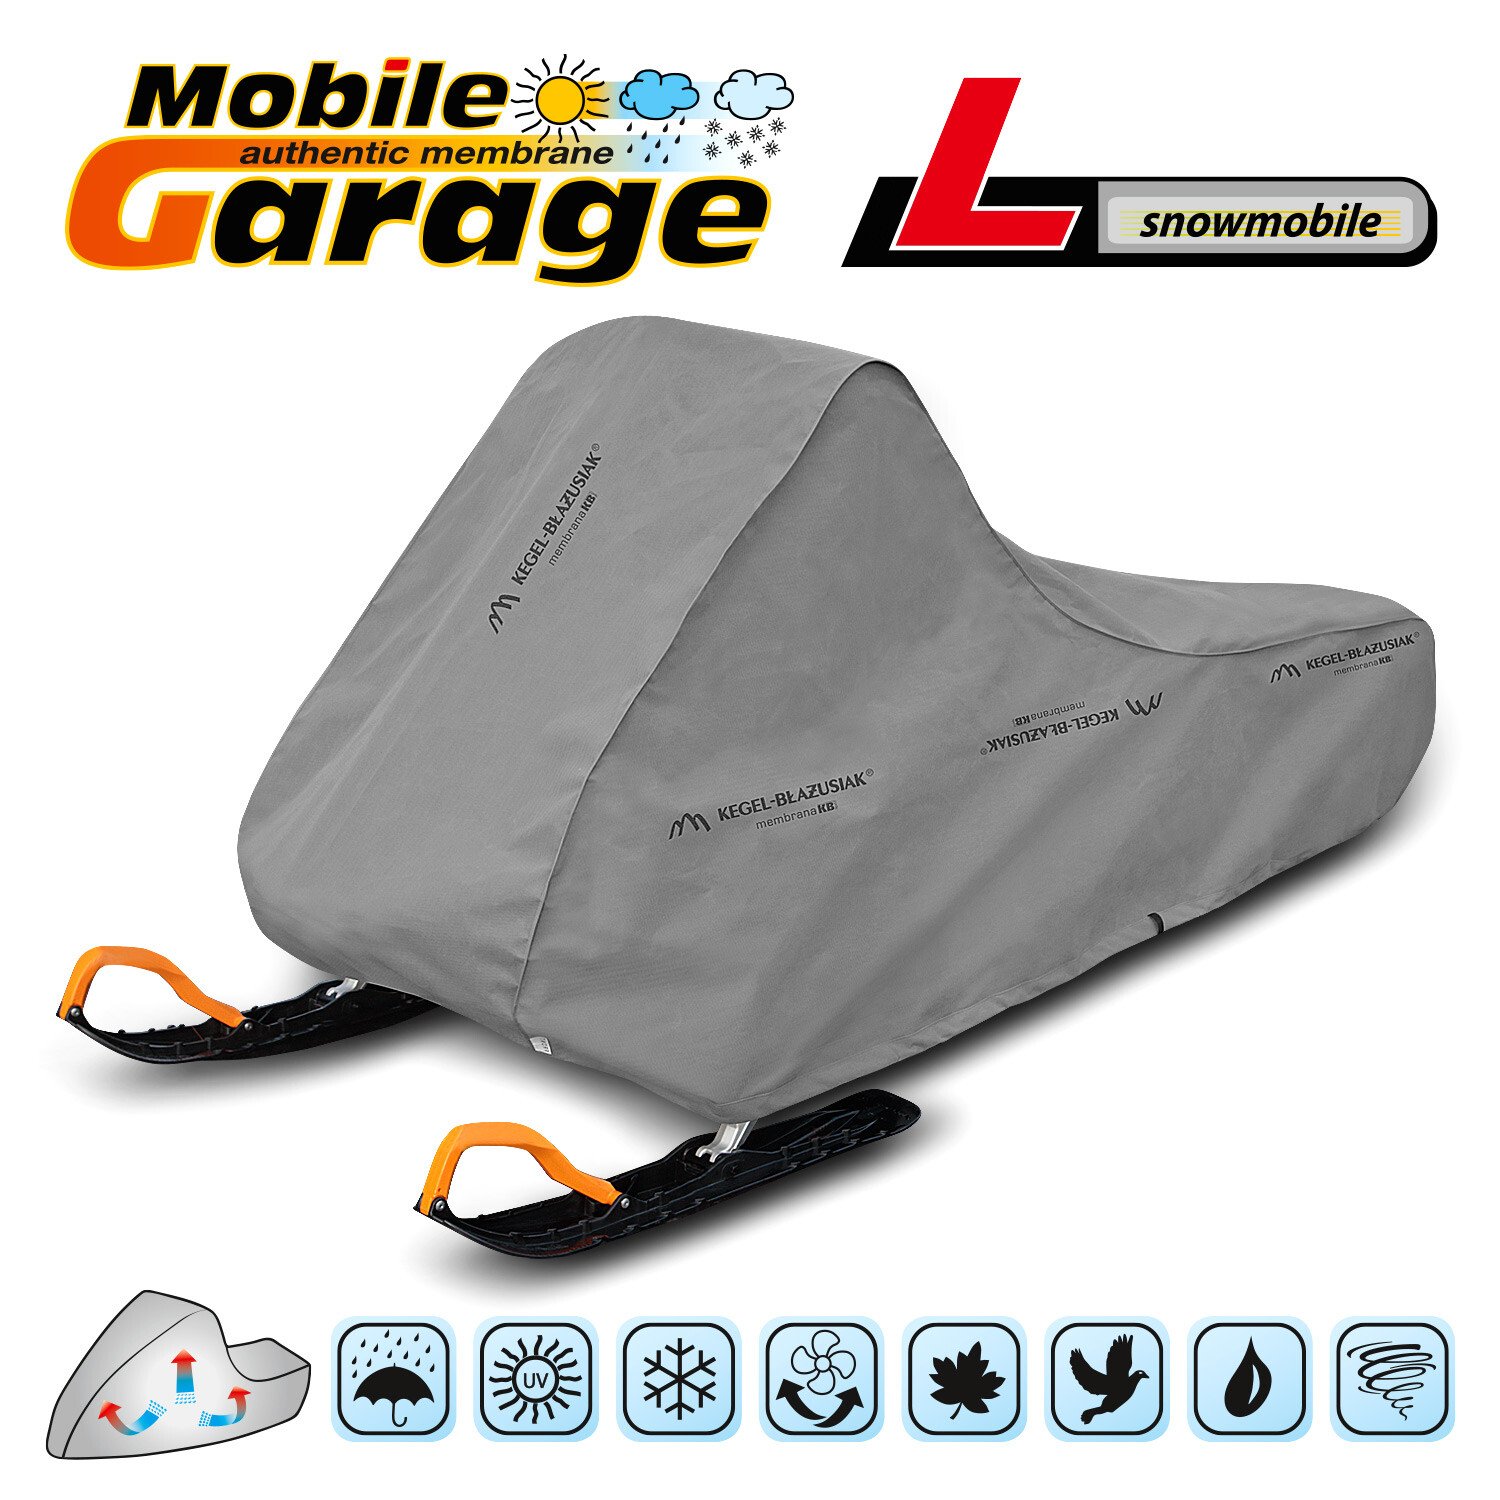 Mobile Grage snowmobile cover - L - 310x90x127cm thumb